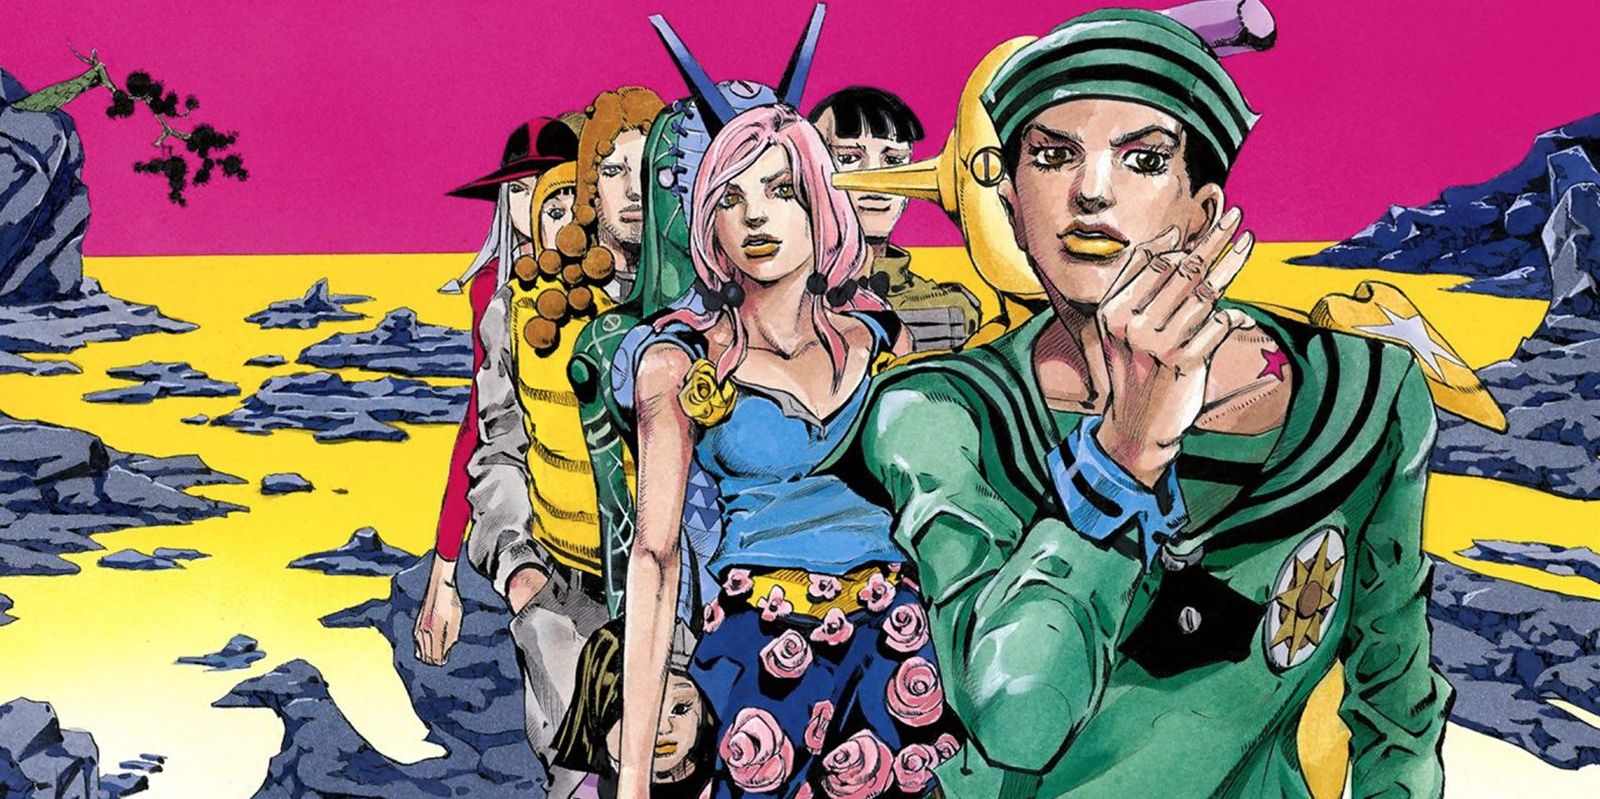 JoJo's Bizarre Adventure: JOJOLANDS and Spin-Off Manga Announced